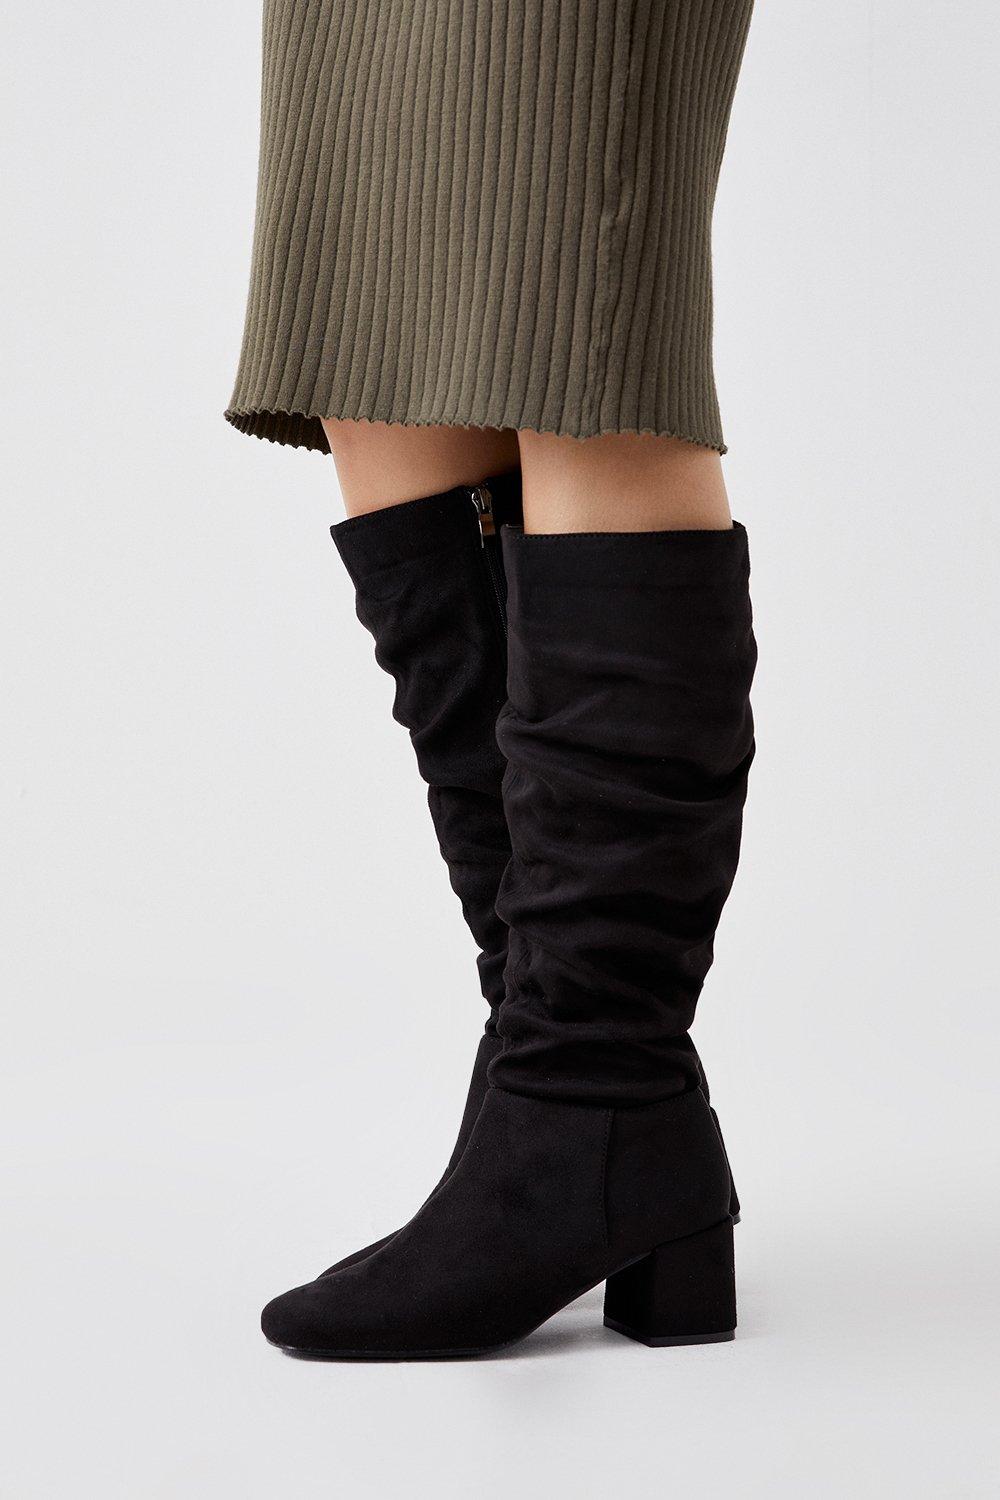 Women's Kaya Ruched Knee High Boots - natural black - 7